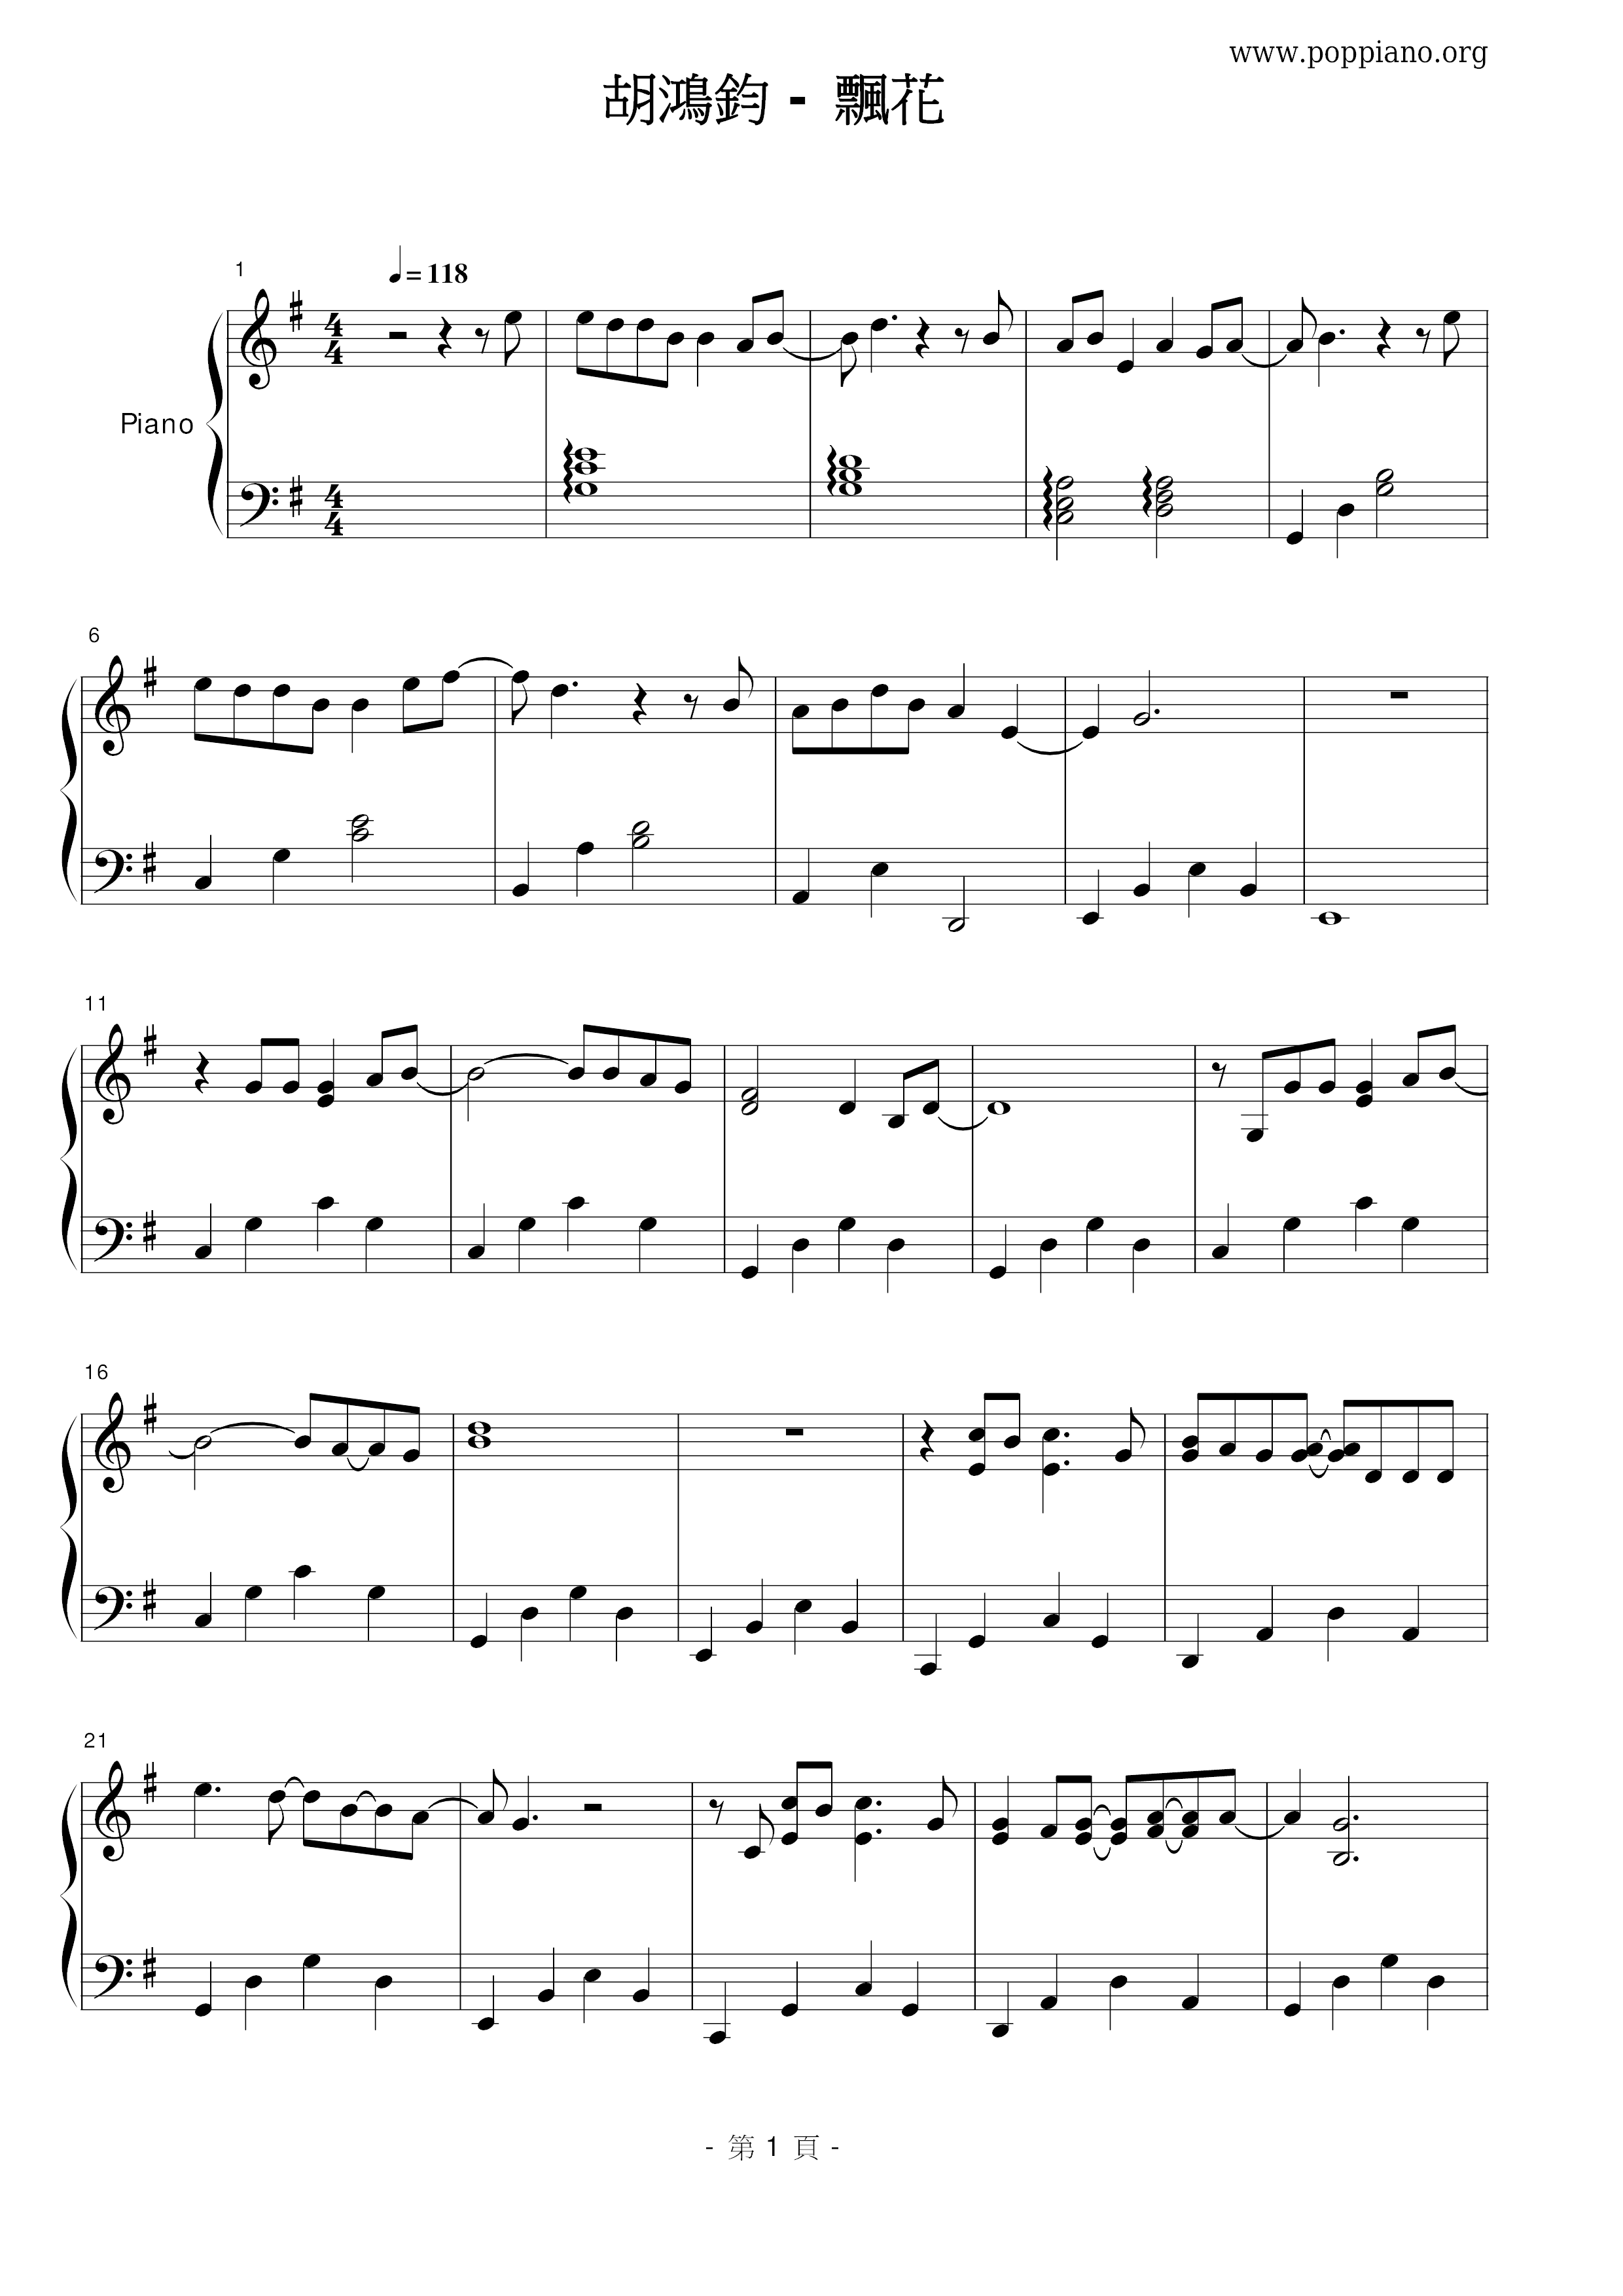 Piaohua Score